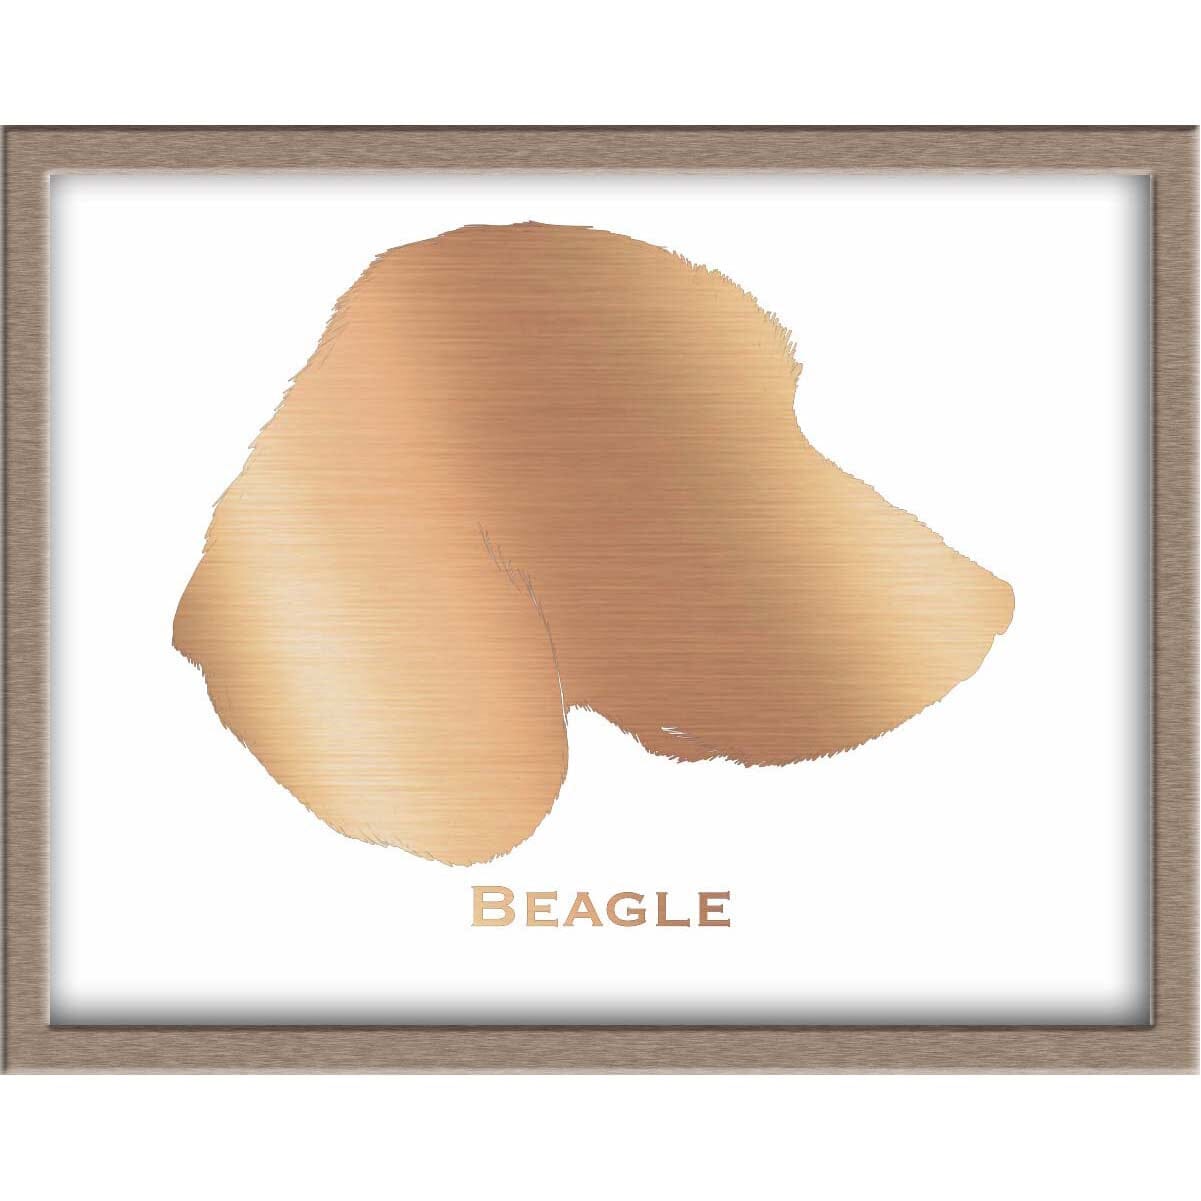 Beagle Silhouette Foiled Print Posters, Prints, & Visual Artwork JoyousJoyfulJoyness 